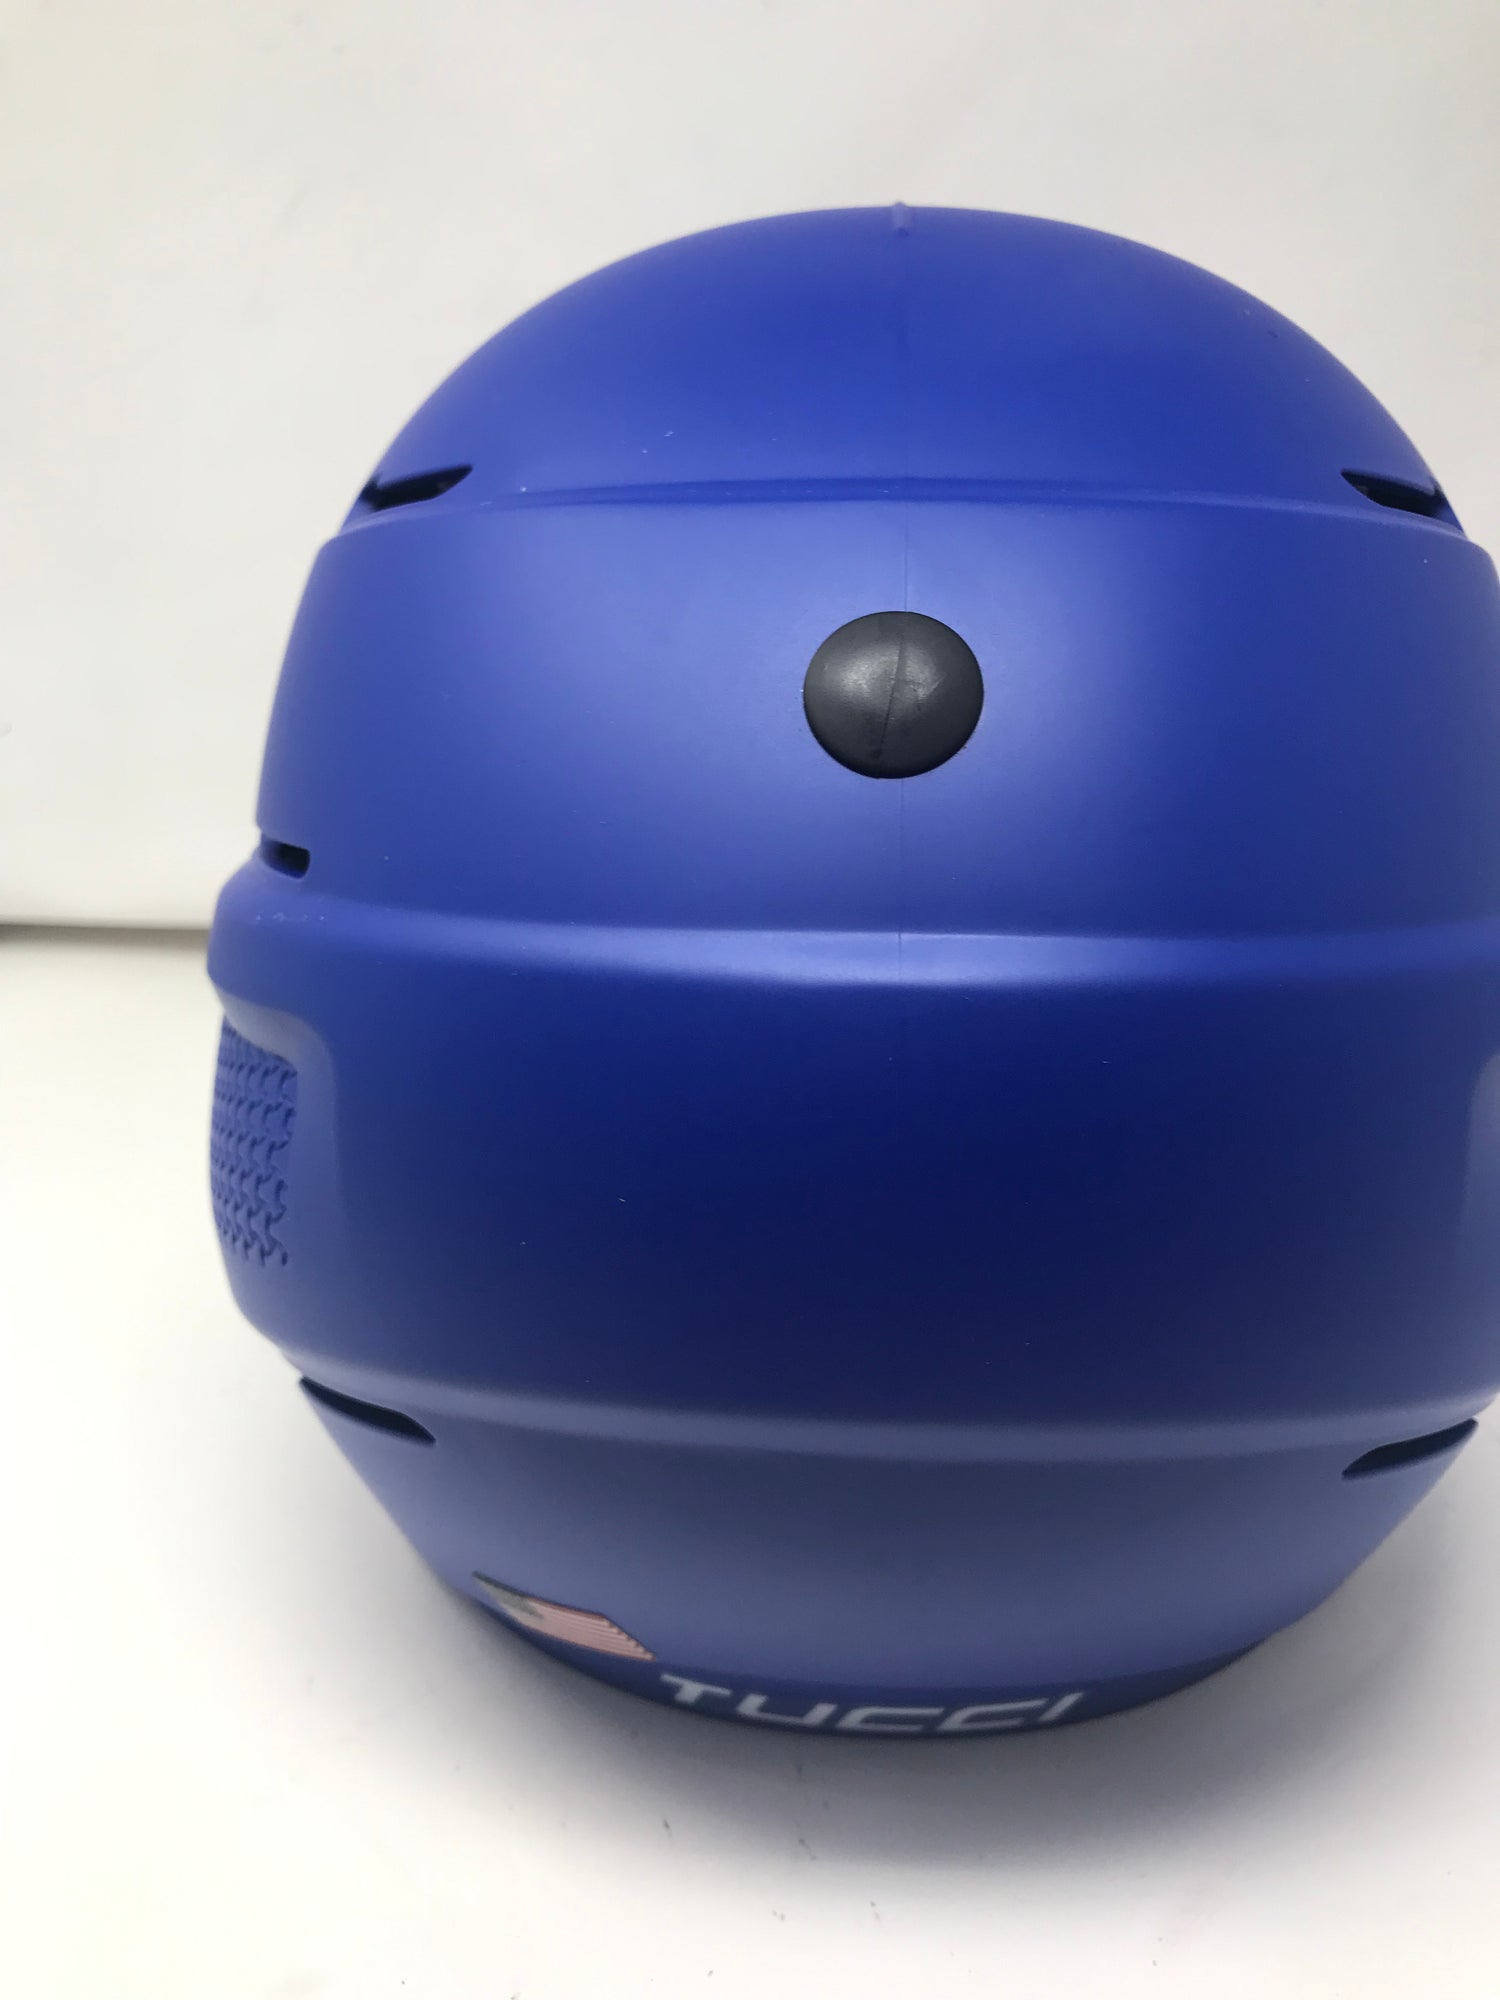 New Schutt Tucci XR1 Air Baseball Batter's Helmet Junior OSFM Matte Red